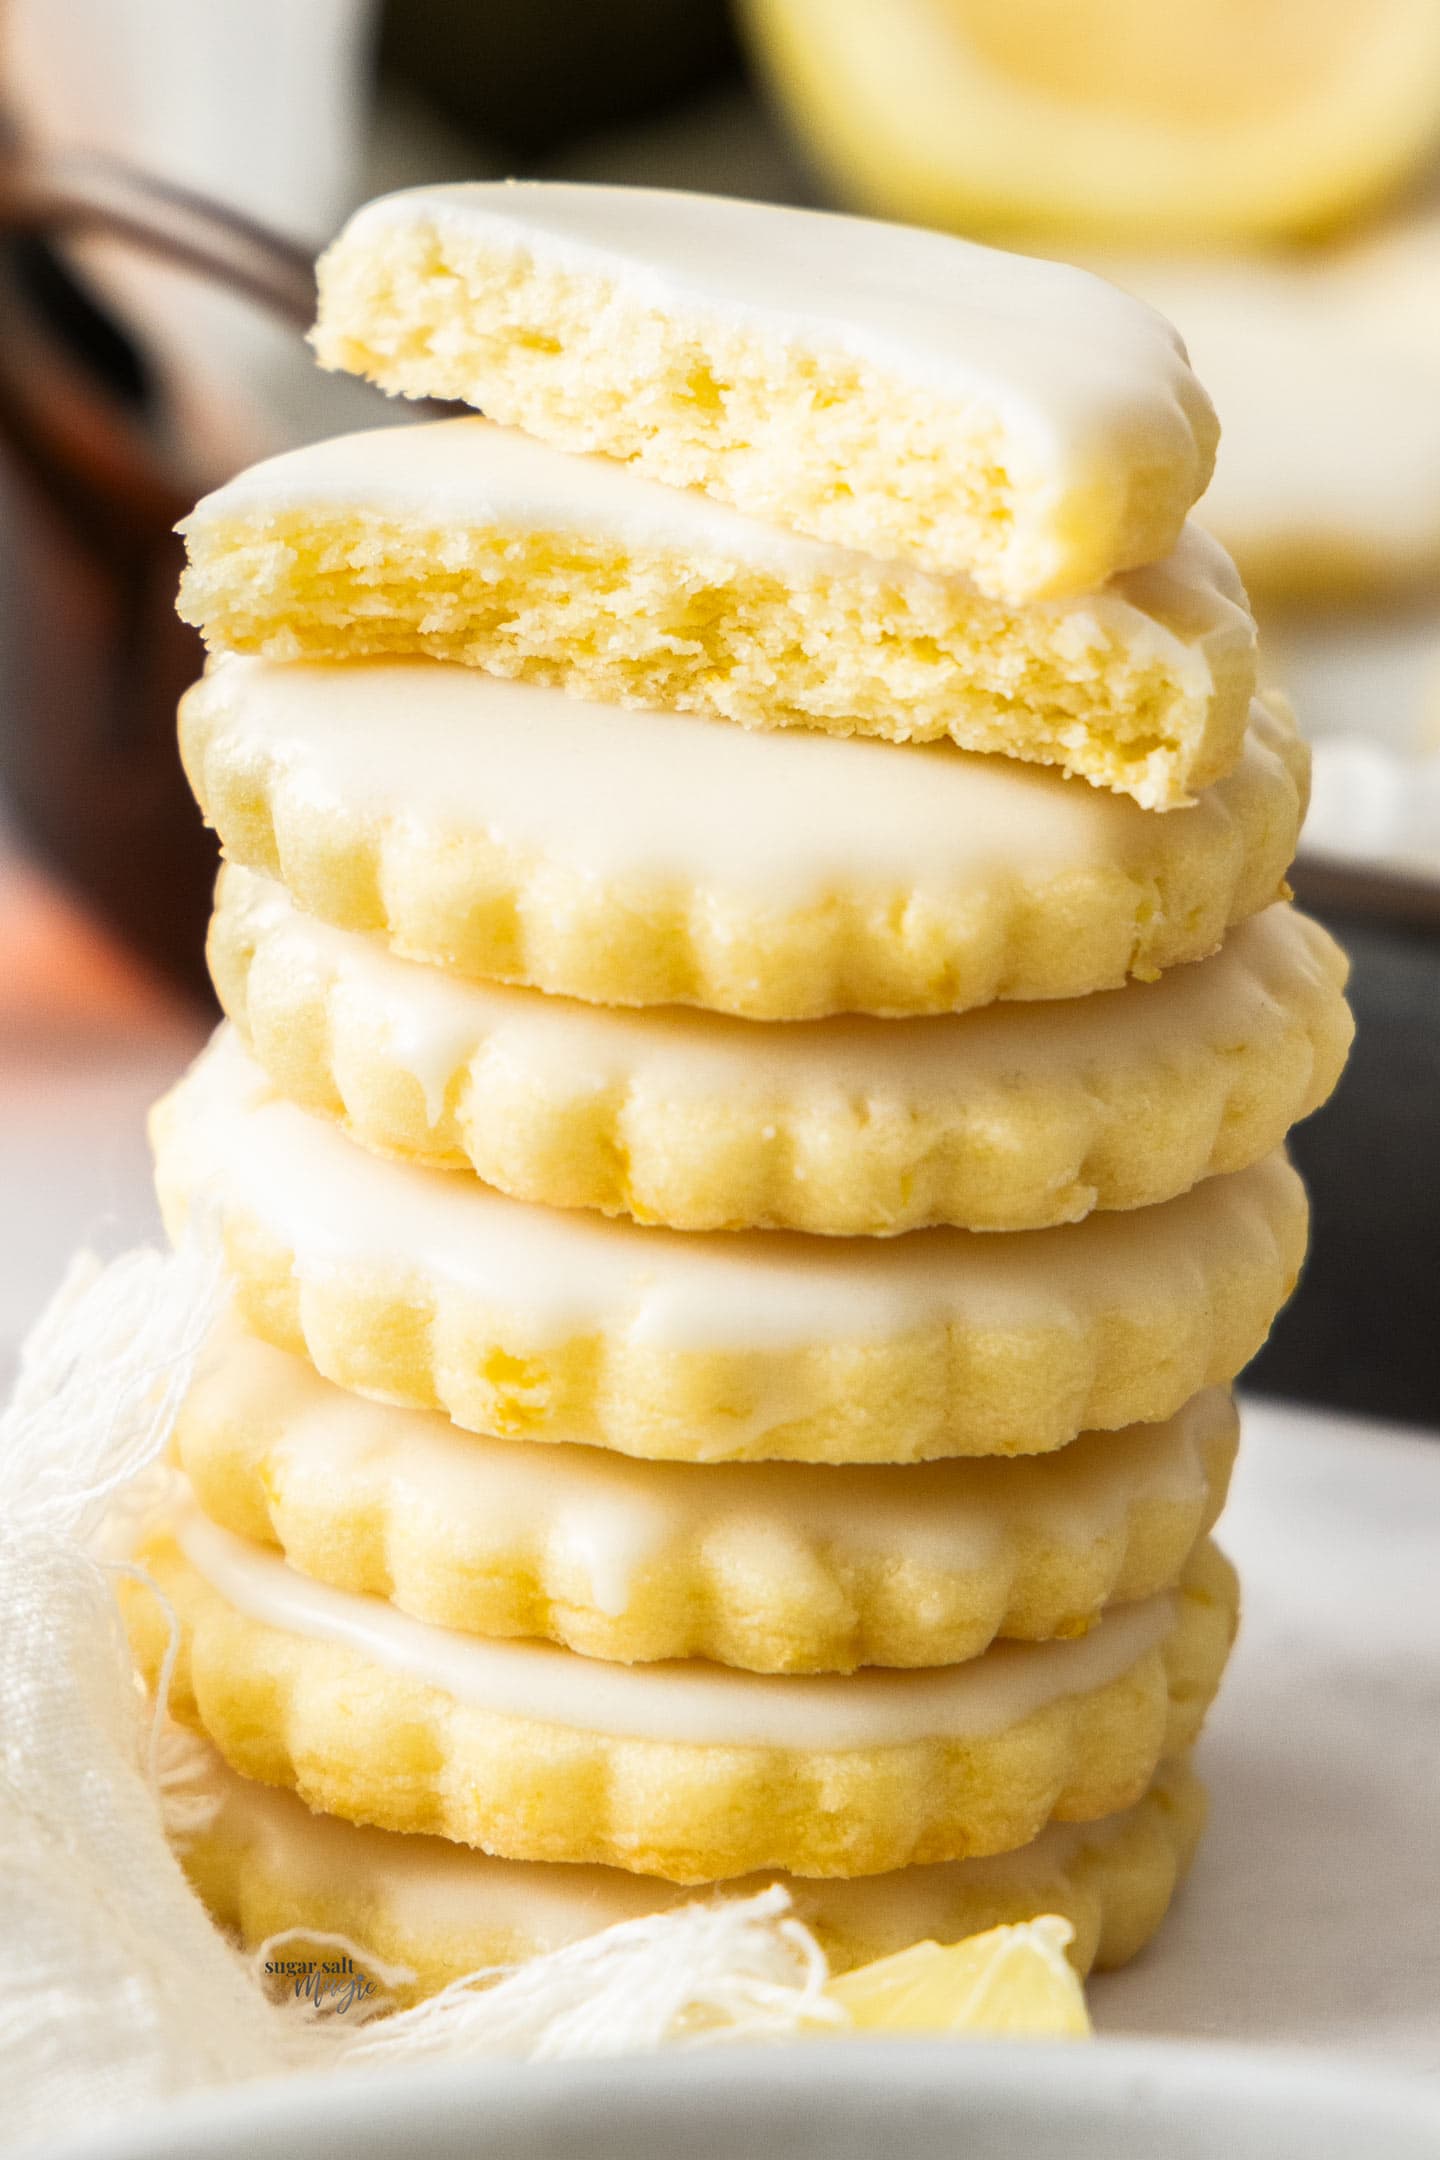 A stack of 7 lemon cookies with the top one broken in half.